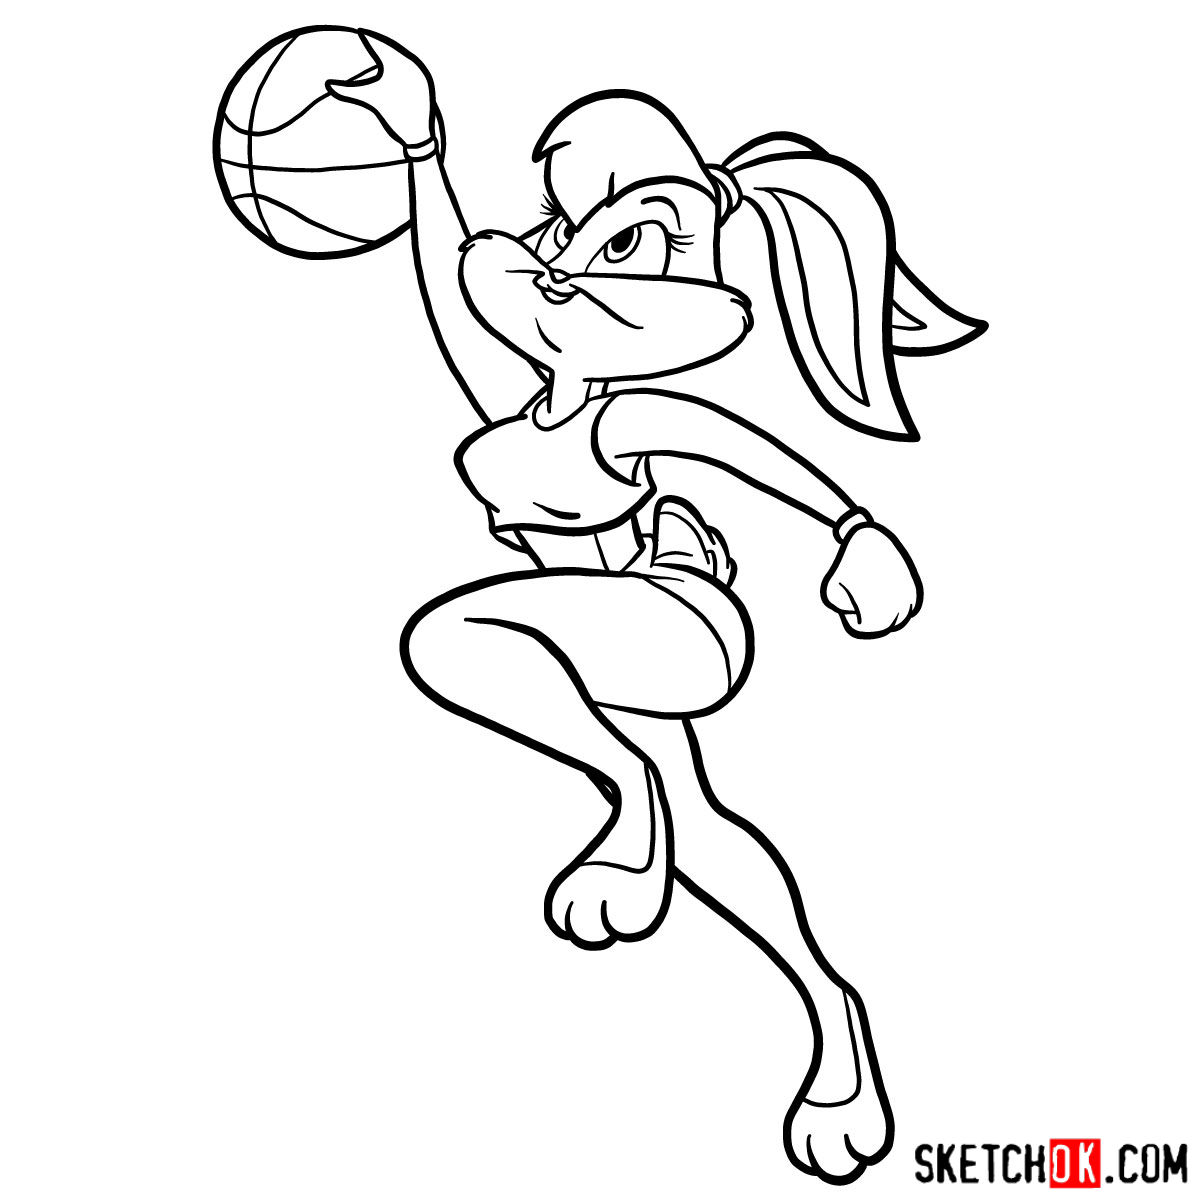 How to draw Lola Bunny playing basketball - step 13